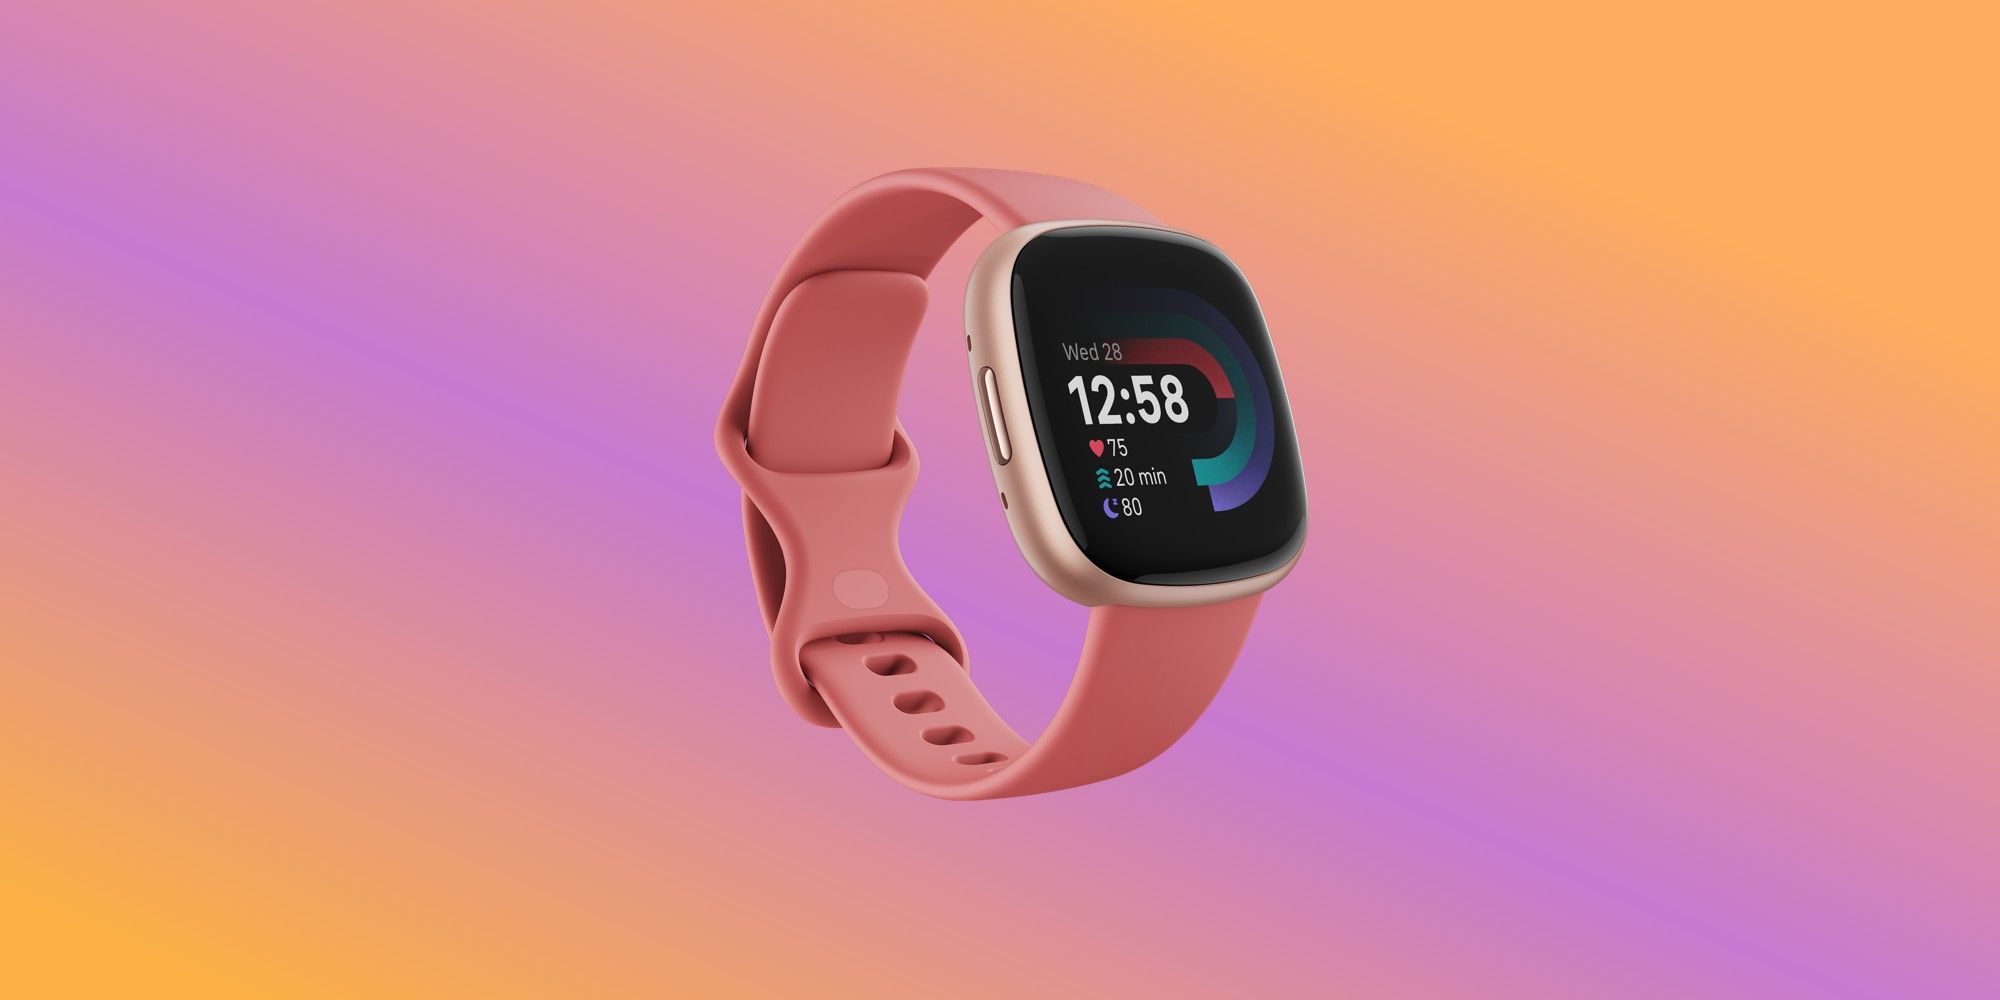 Fitbit Versa review: A lower-cost Apple Watch alternative - CNET